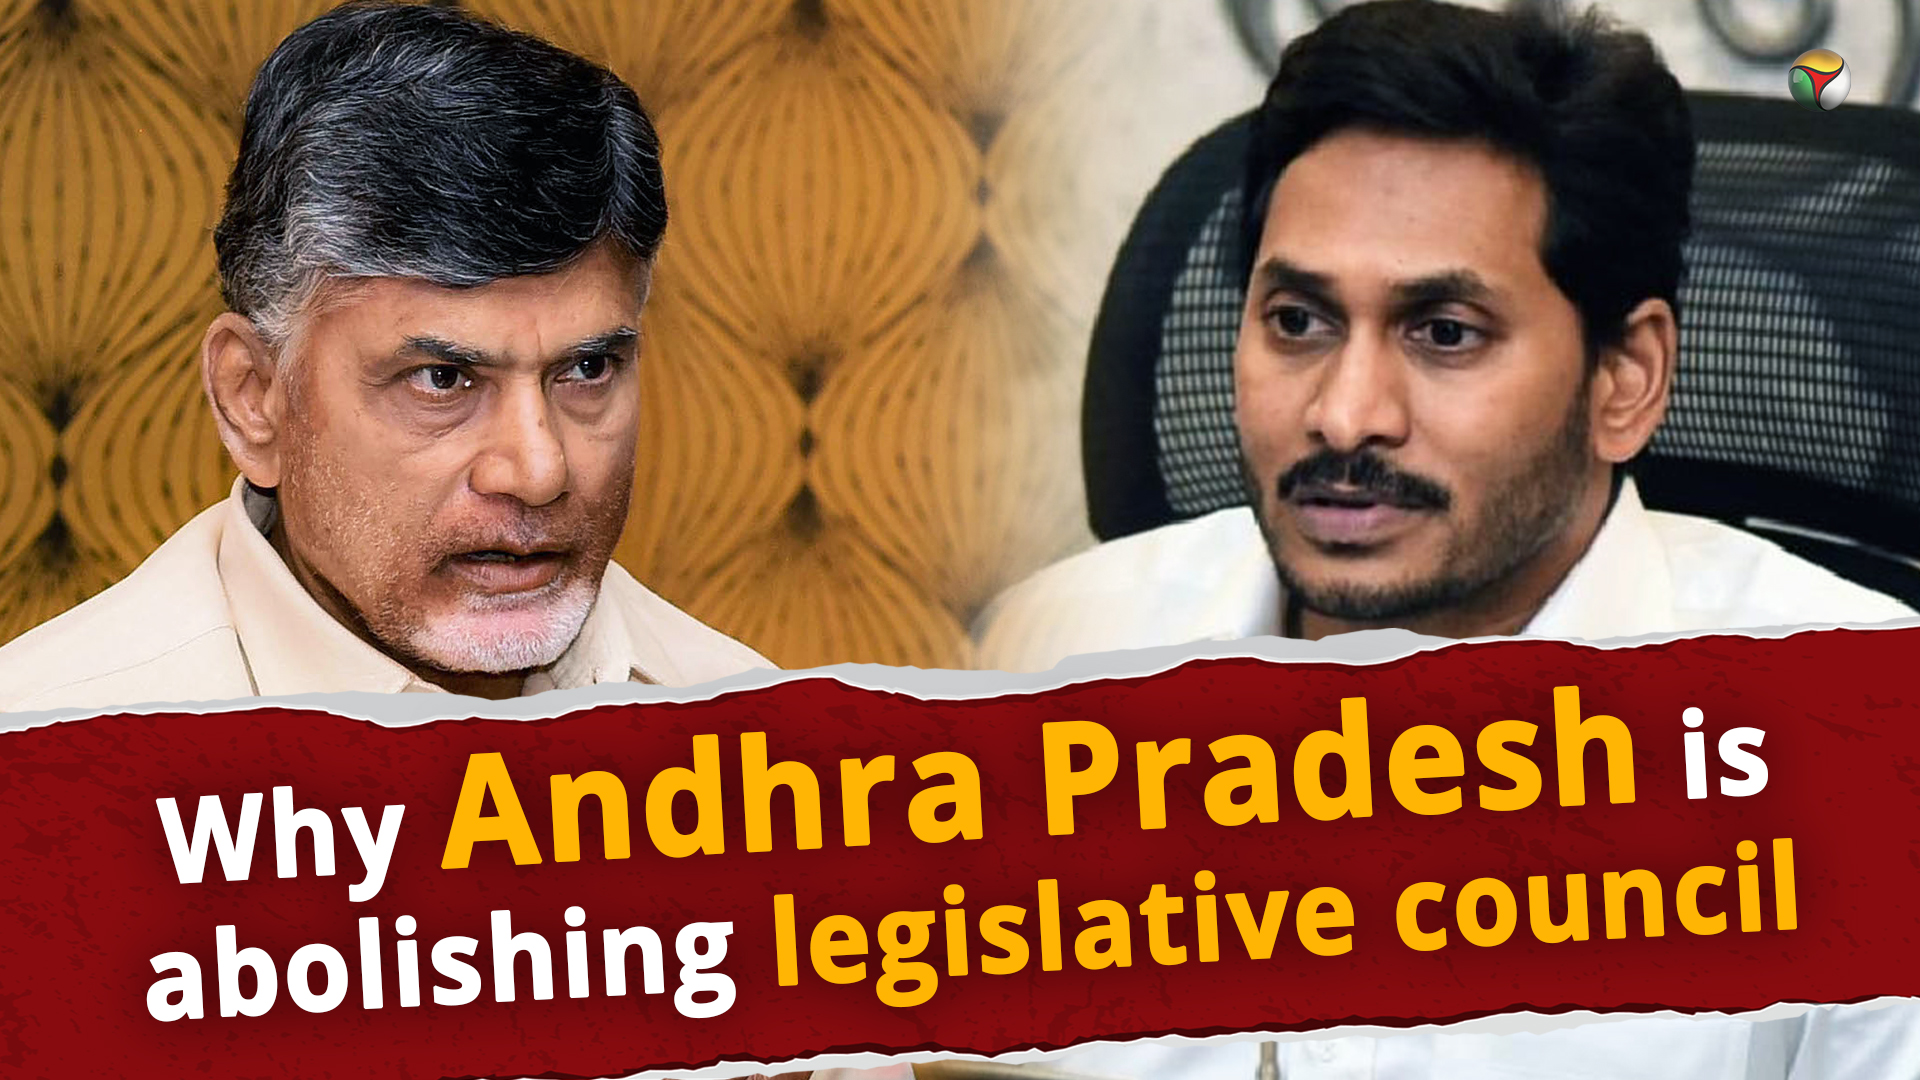 What abolishing legislative council in Andhra Pradesh means